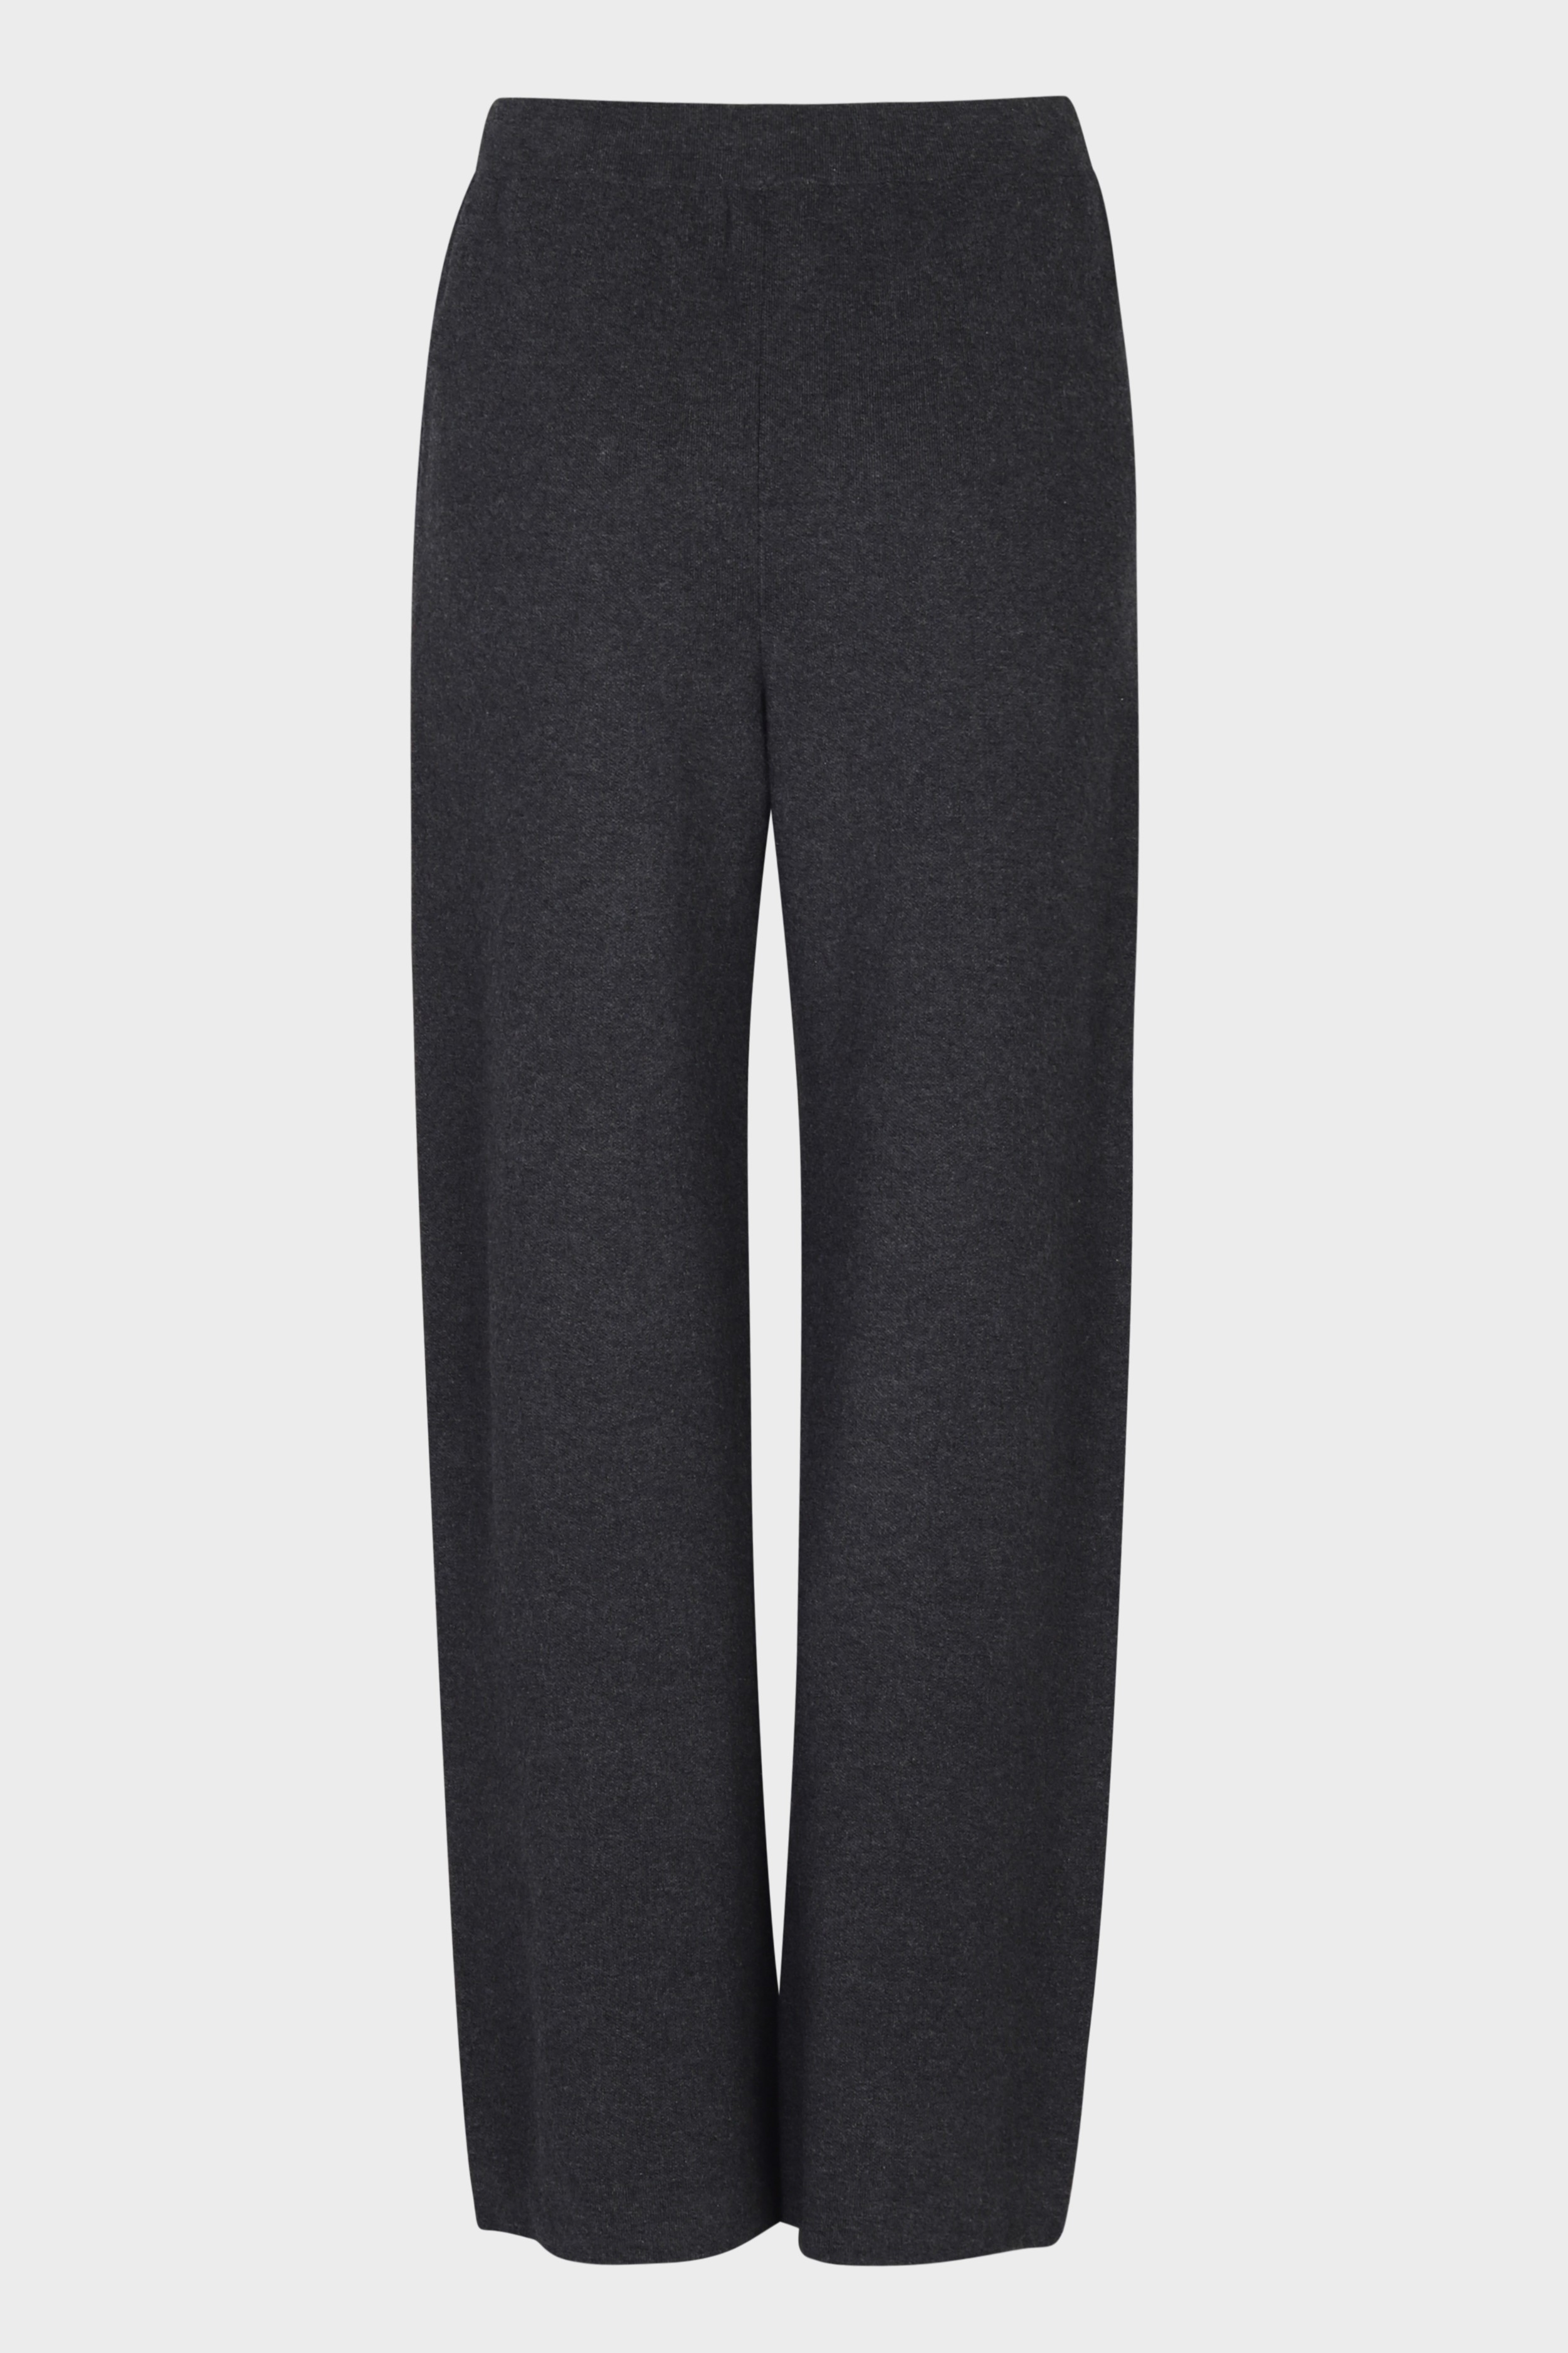 FLONA Cotton/ Cashmere Knit Pant in Dark Grey M